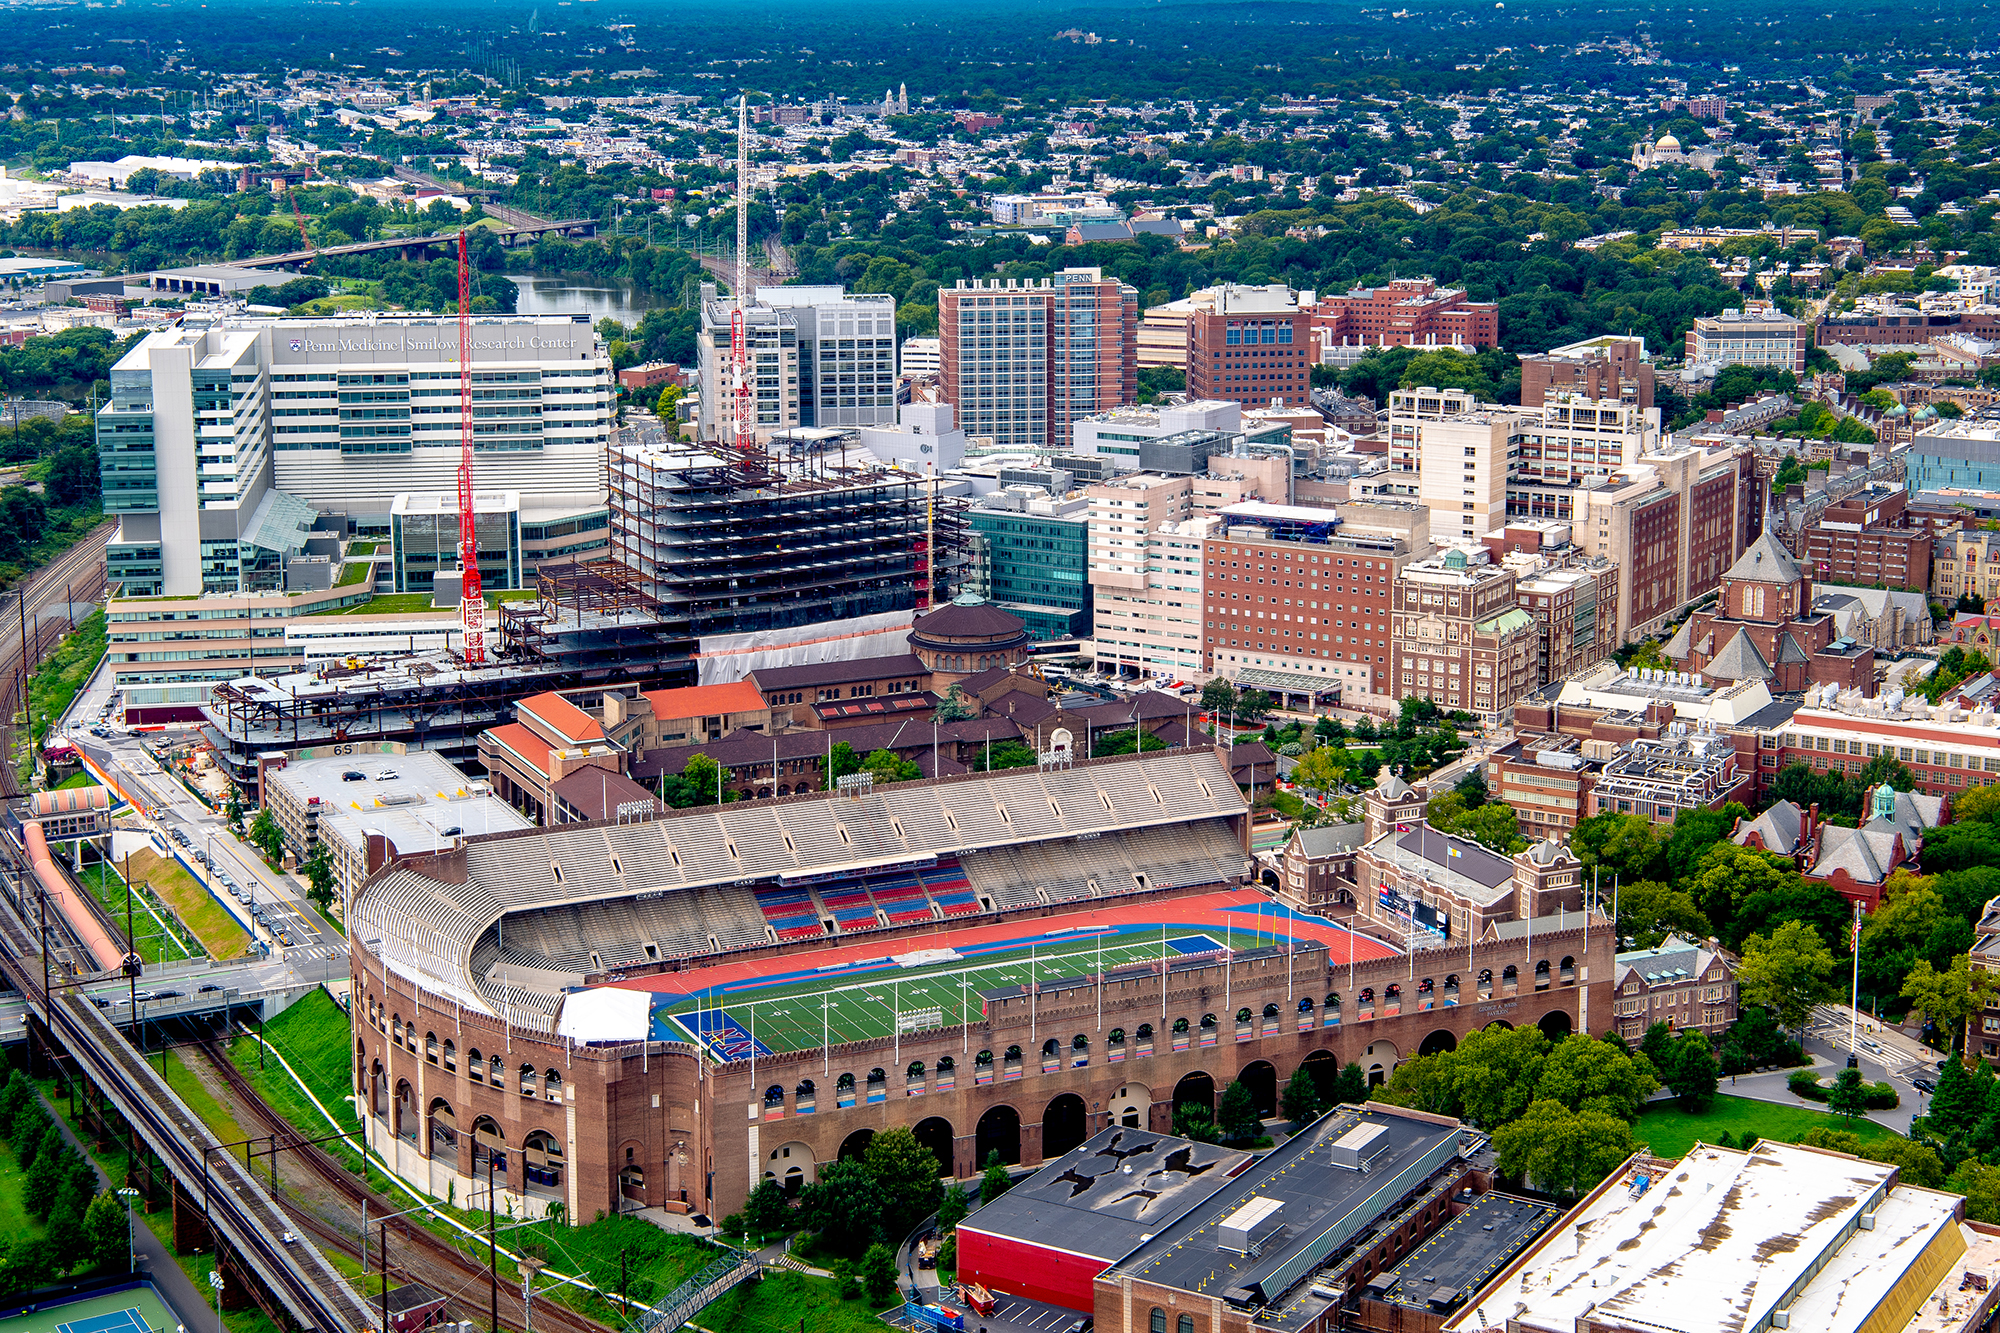 Aerial view of Penn Medicine Complex